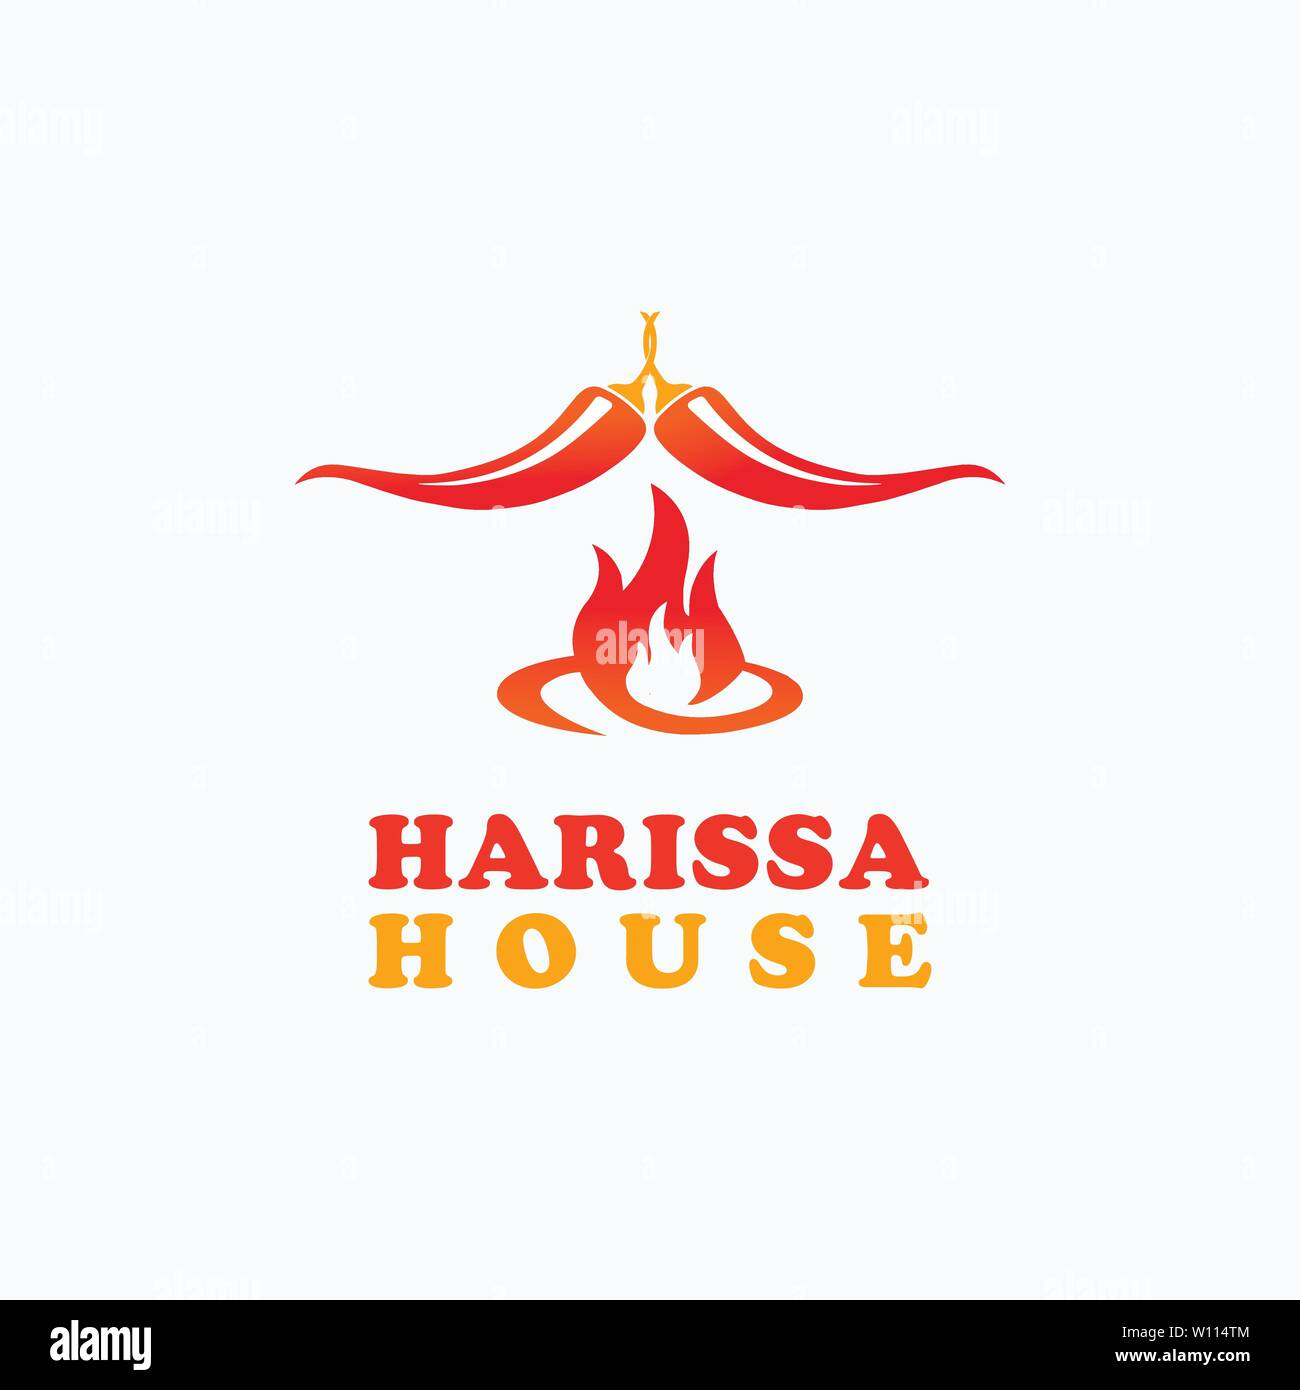 Chili house logo design template Stock Vector